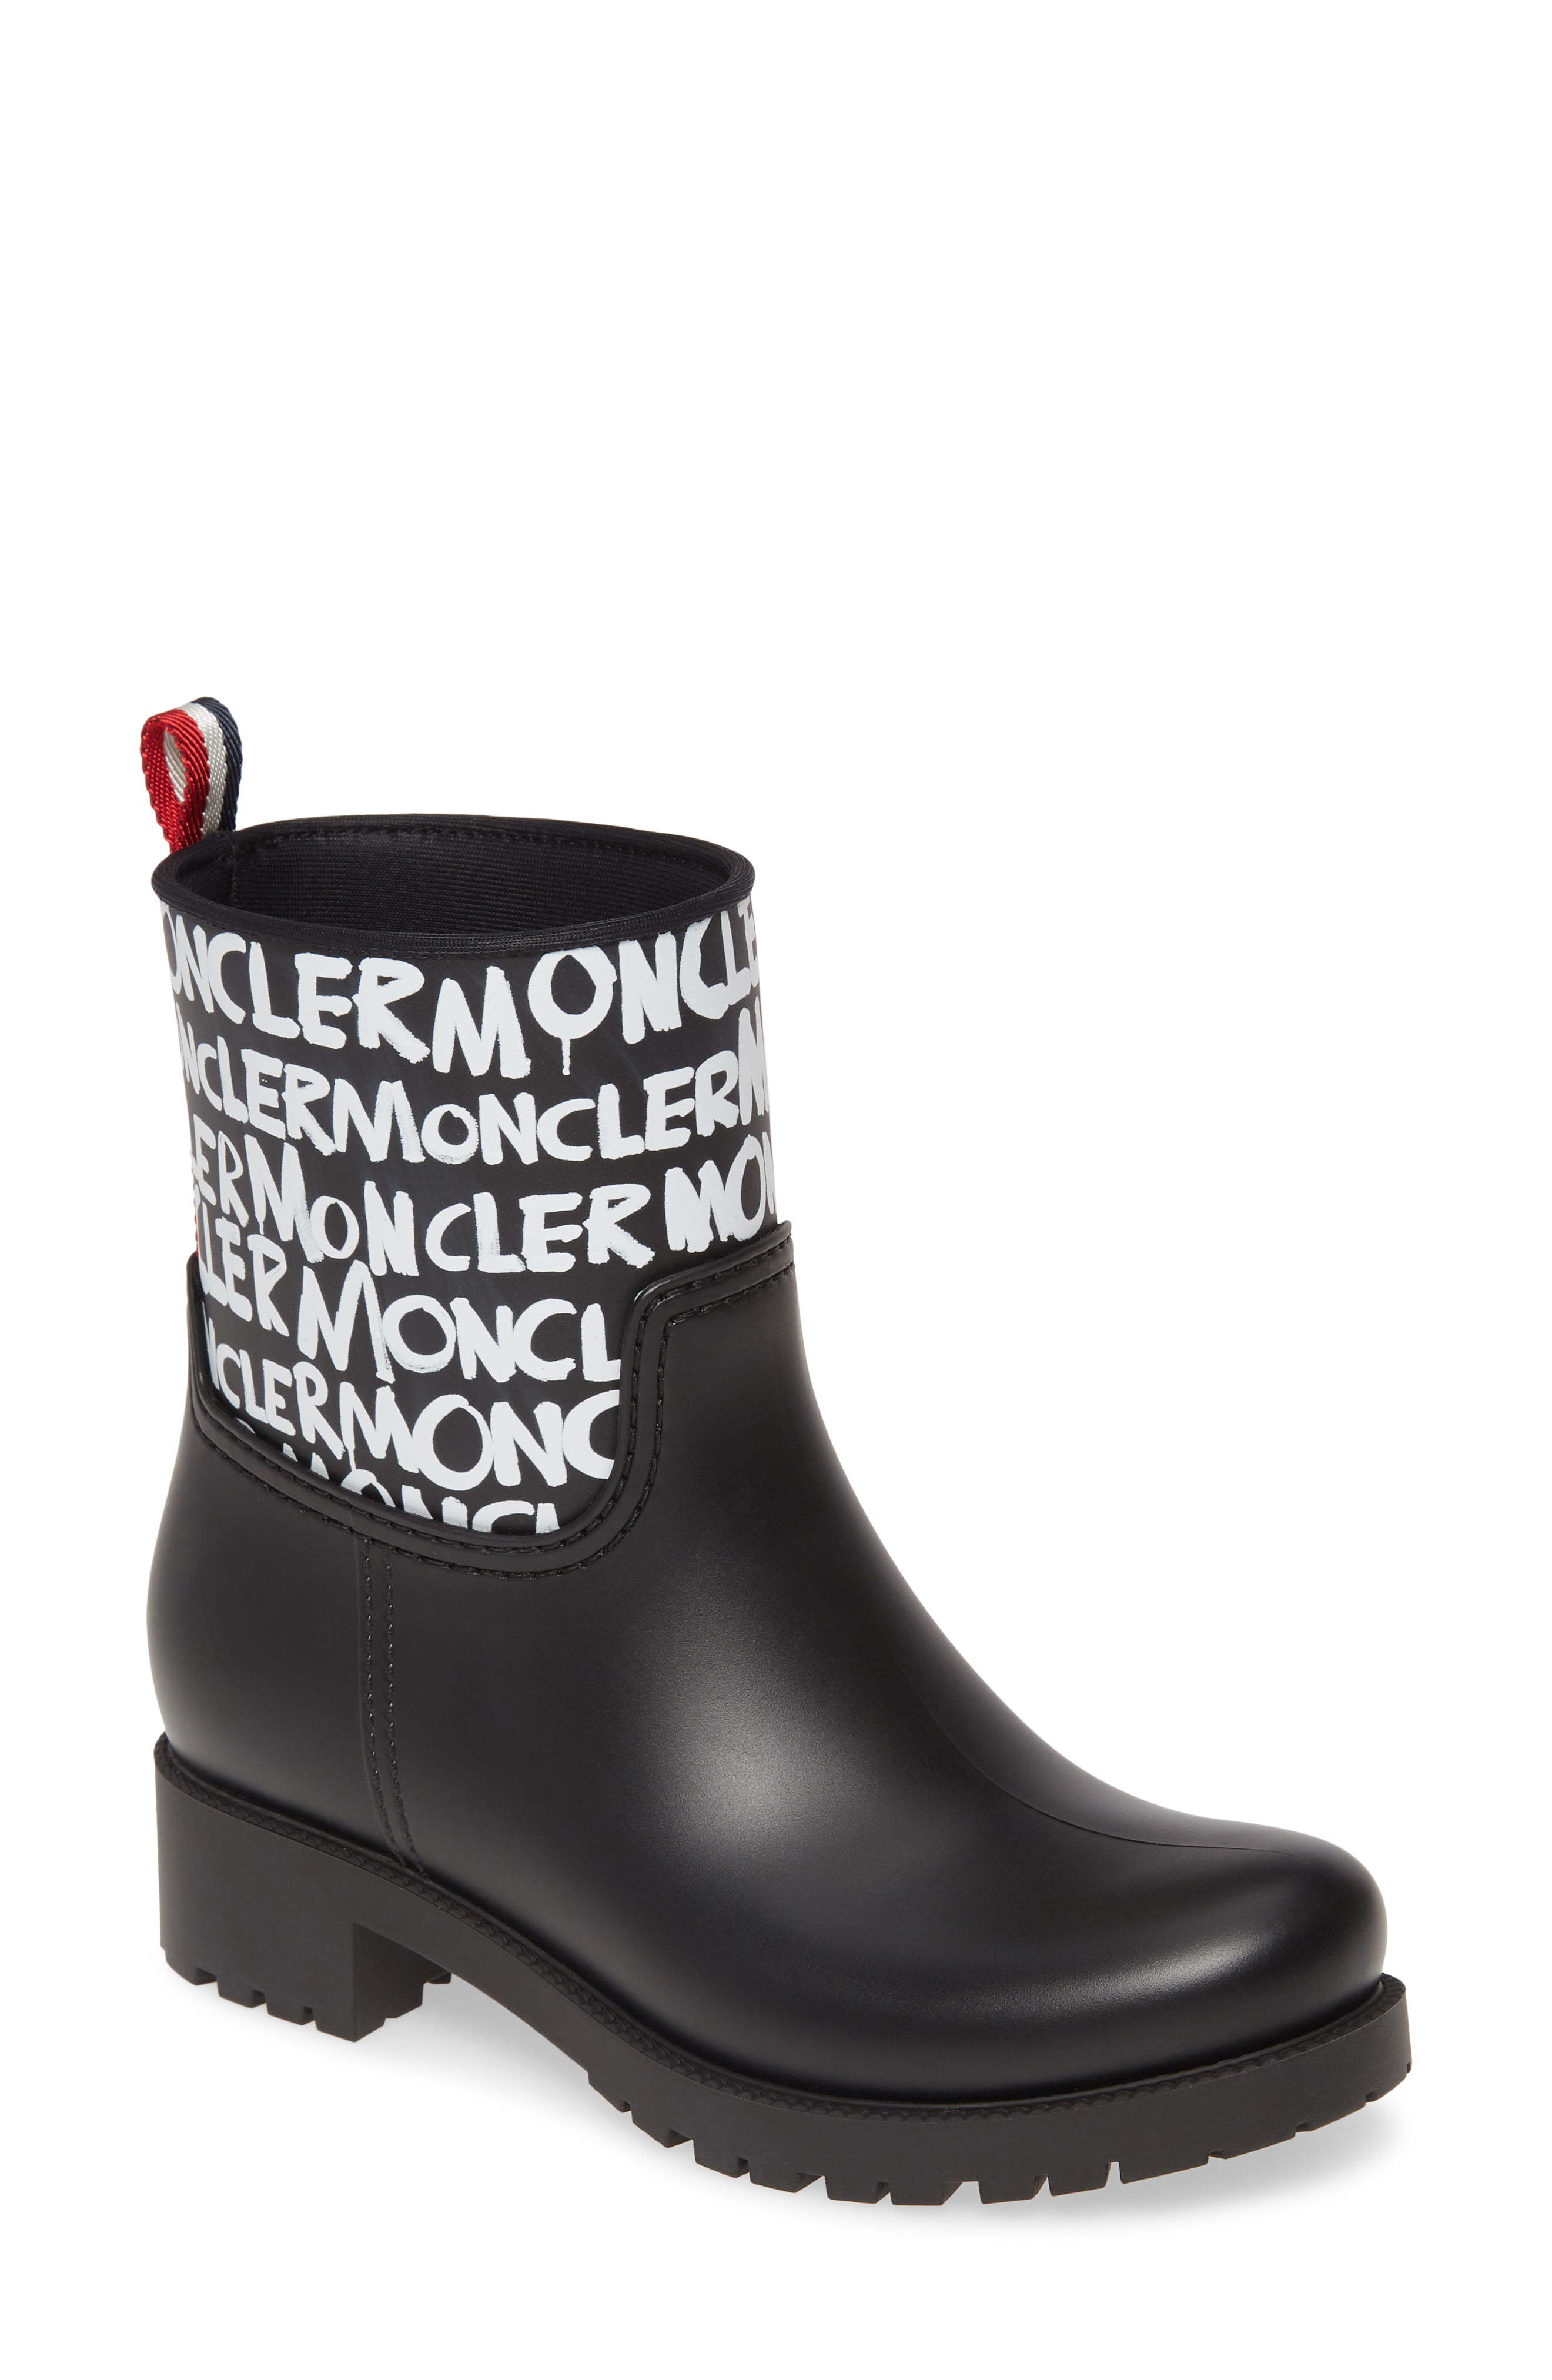 Moncler Ginette Stivale Logo Waterproof Rain Boot, $425 | Nordstrom ...